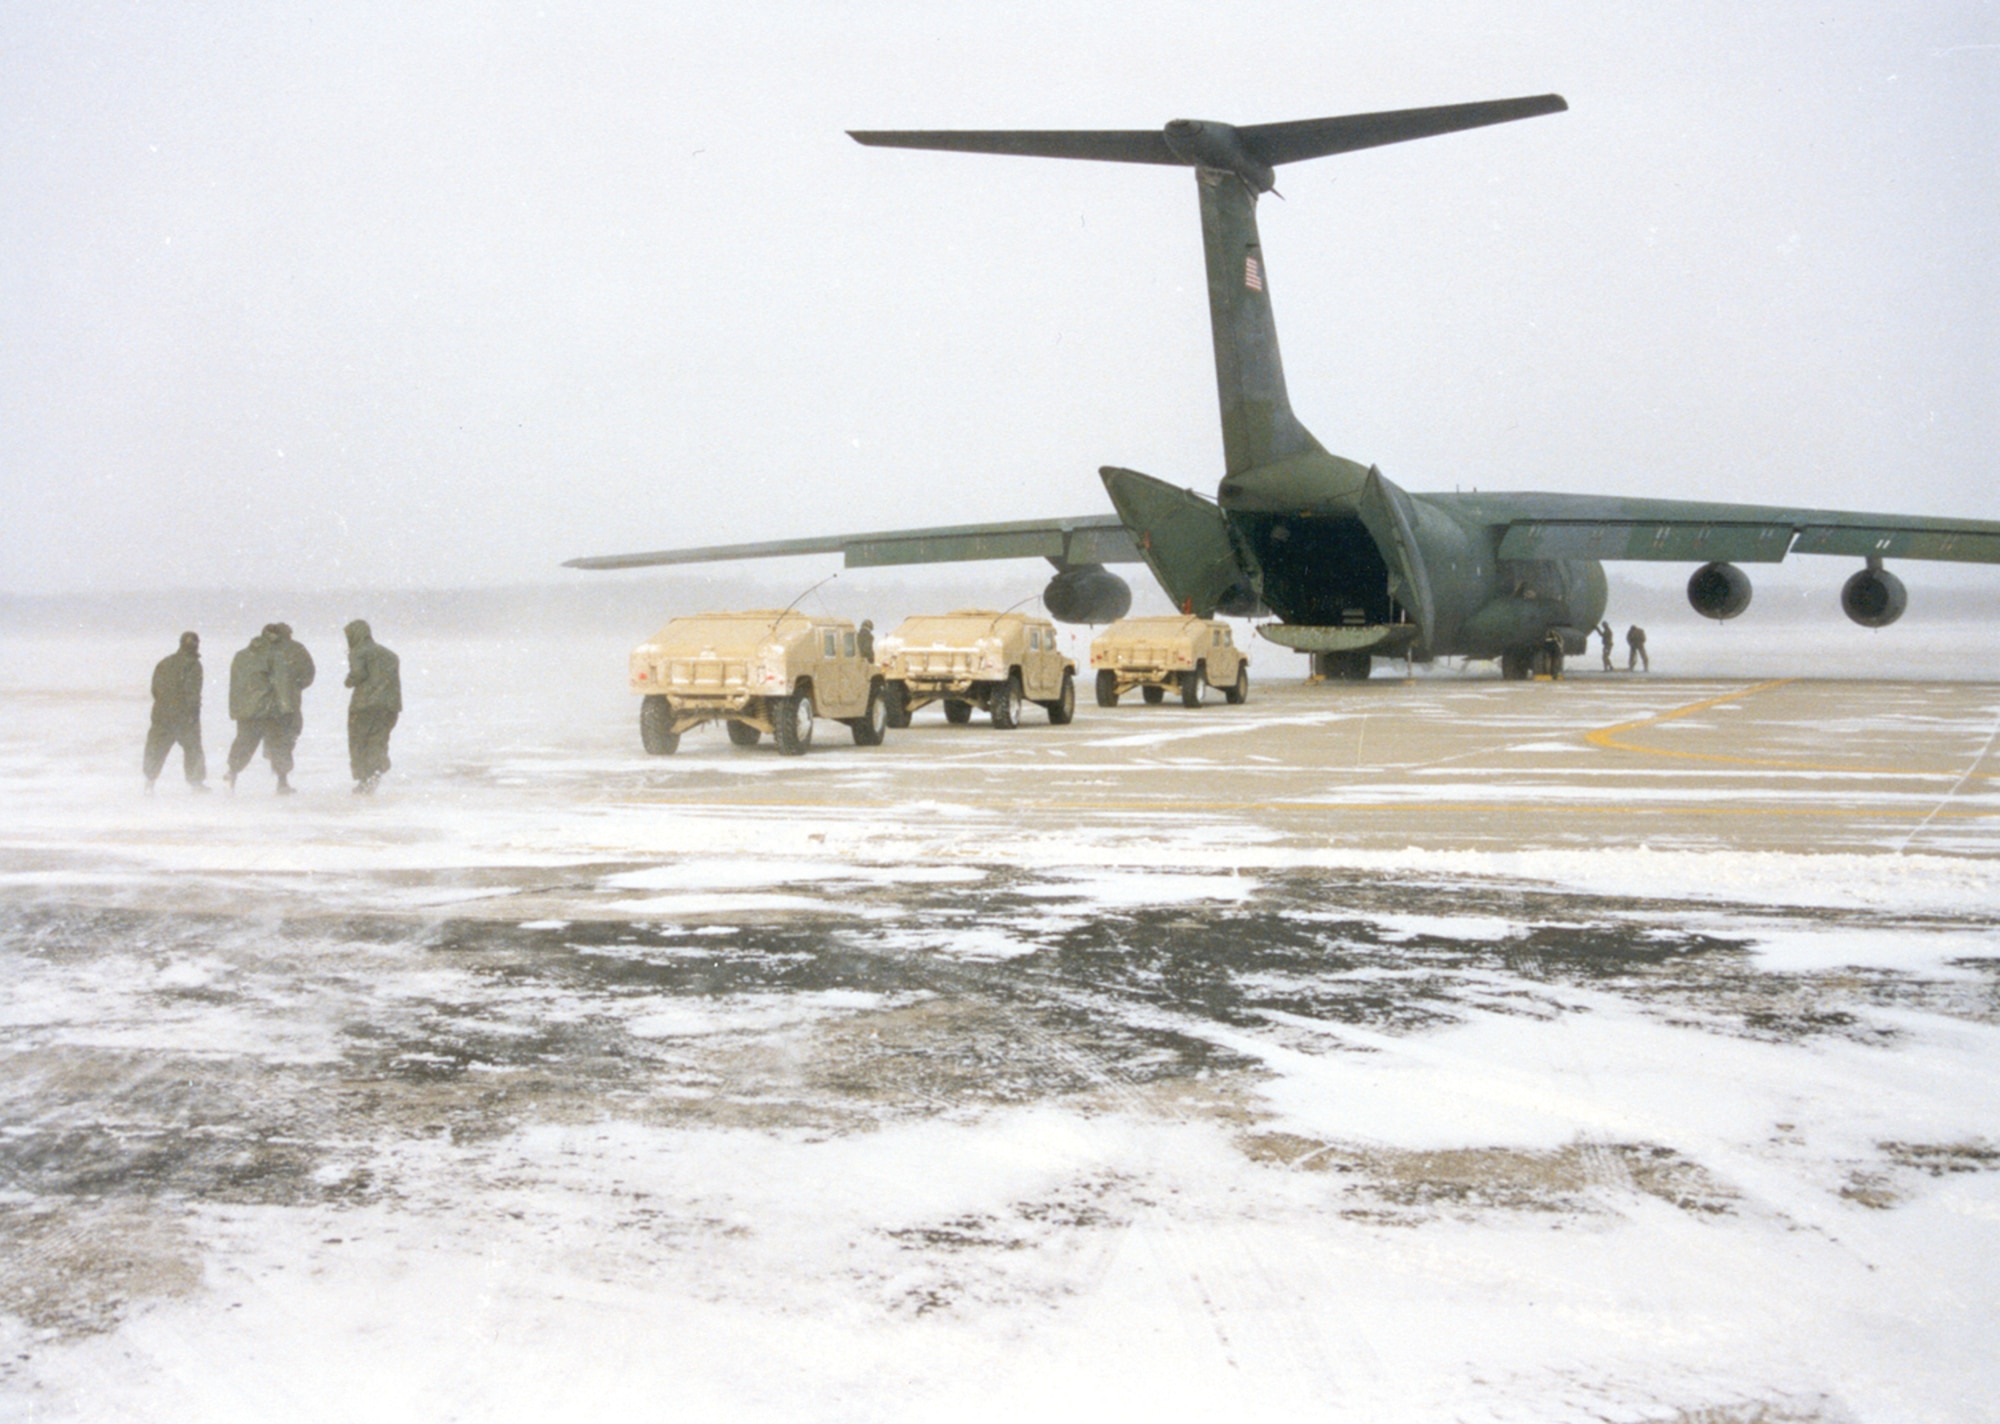 Army vehicles on flight line photo